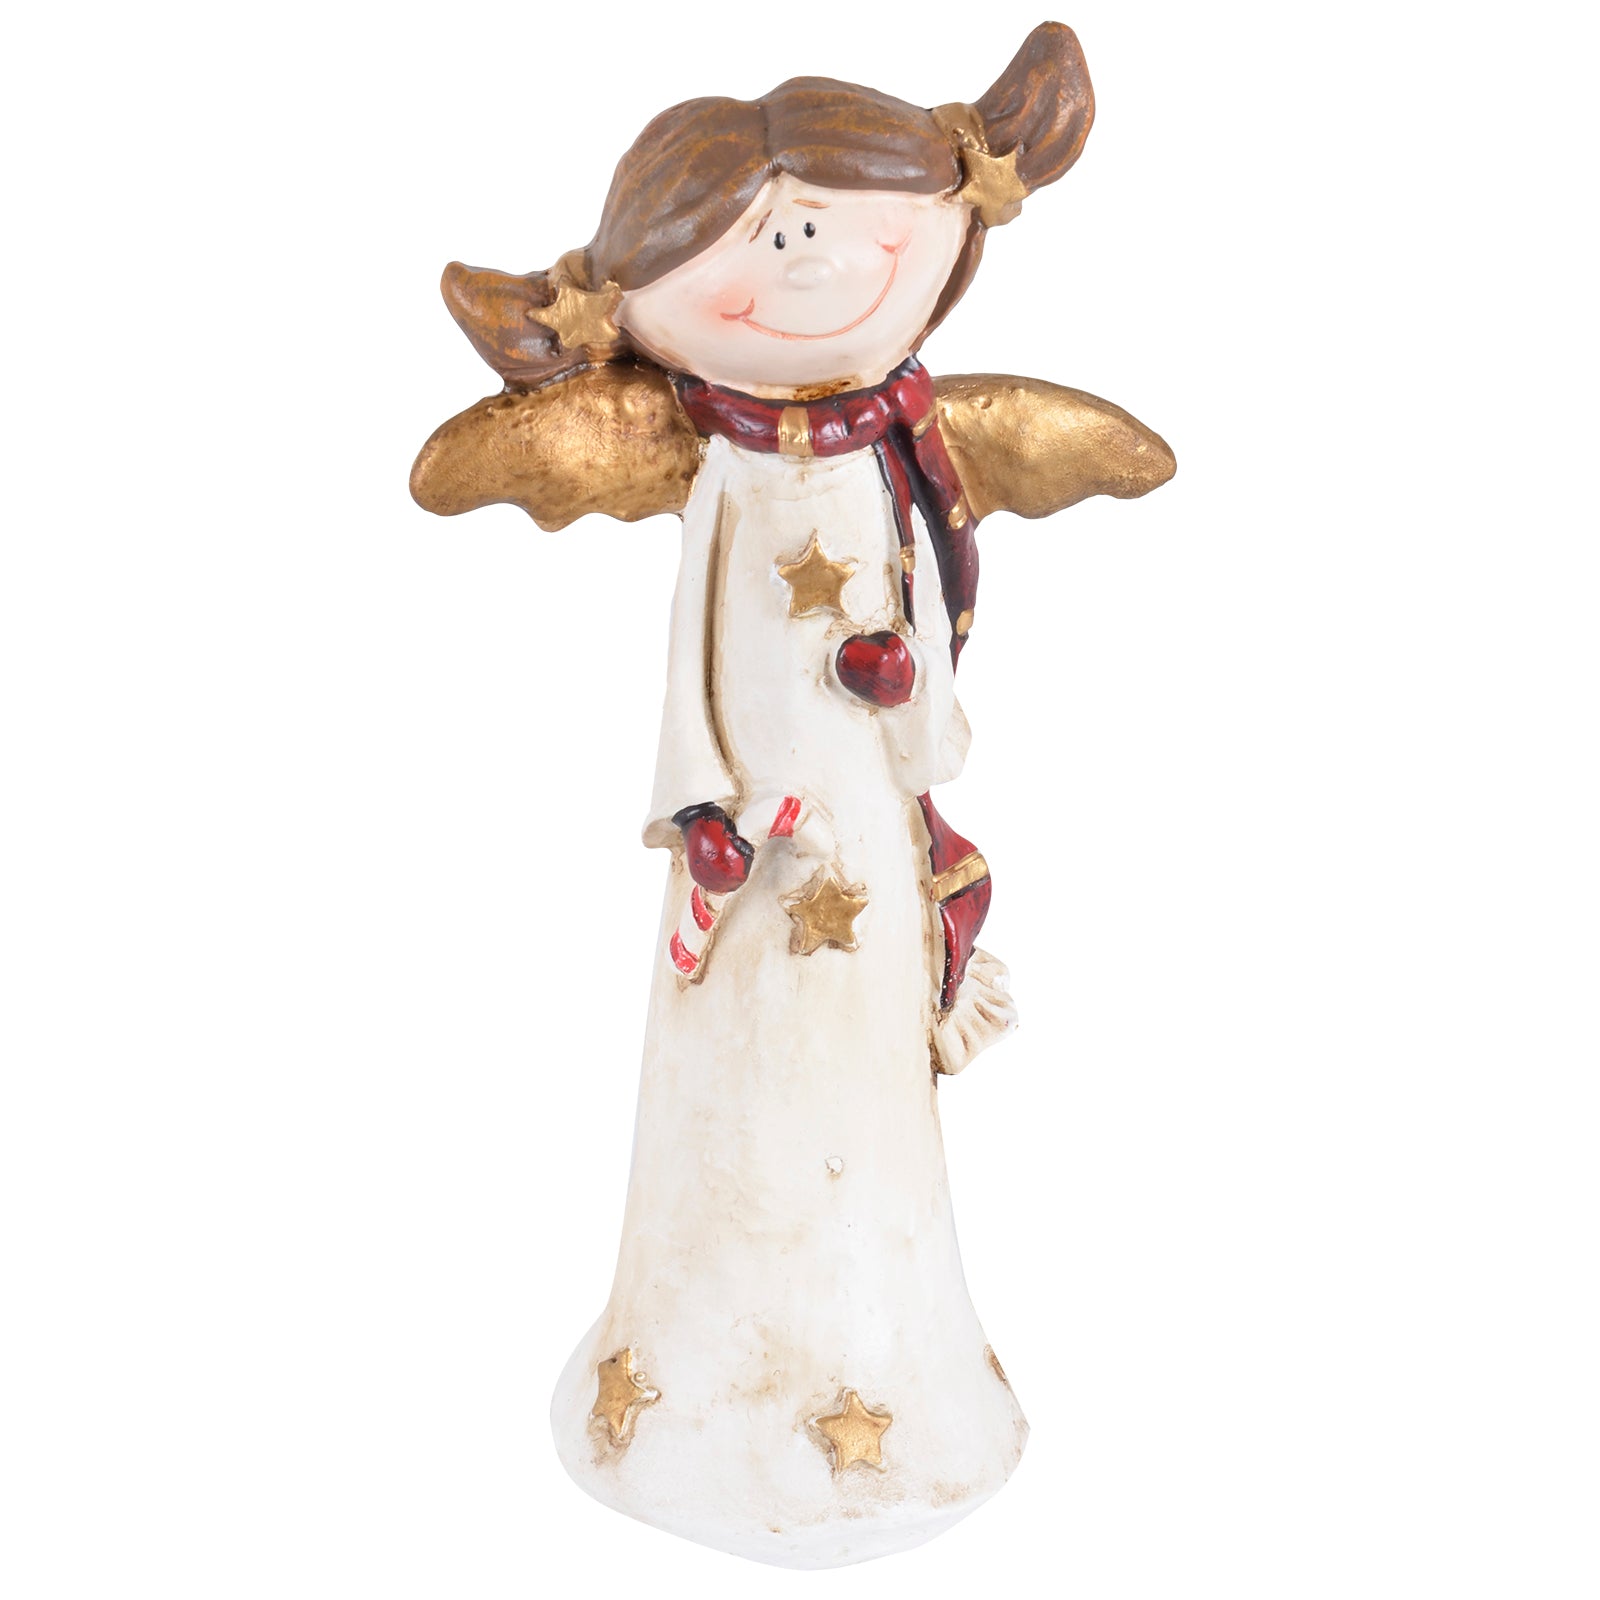 Mr Crimbo Angel Ornament Resin Christmas Decoration - MrCrimbo.co.uk -XS4310 - 16cm -angel figurine